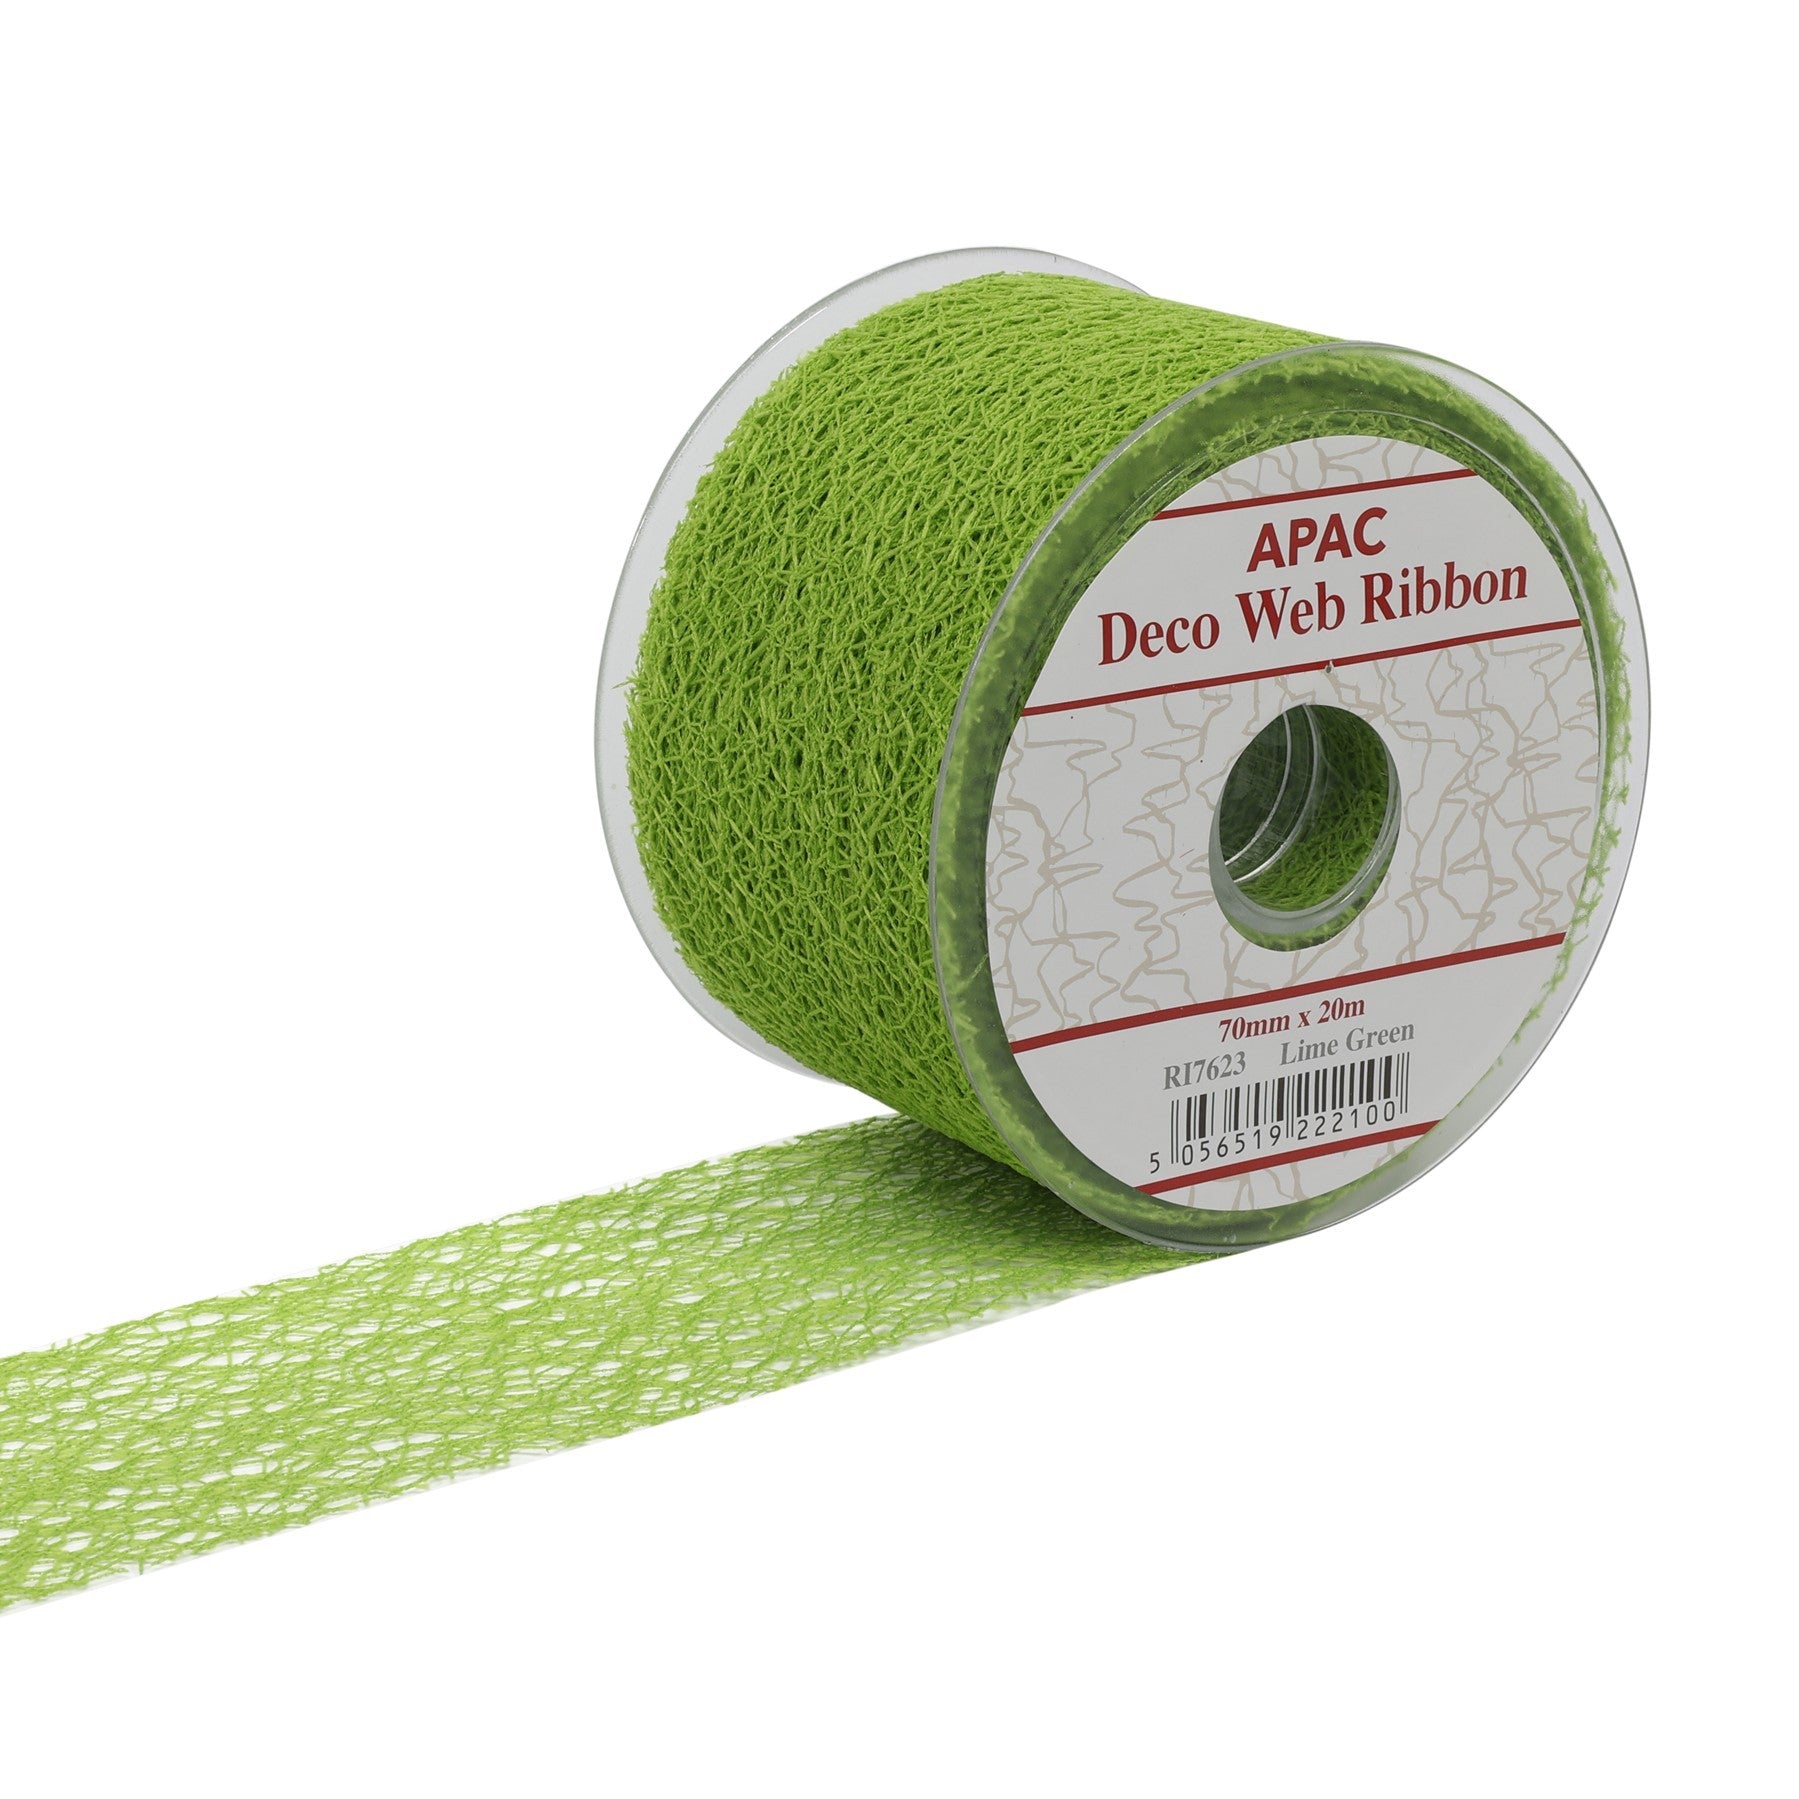 Lime Green Deco Web Ribbon (70mm x 20m)